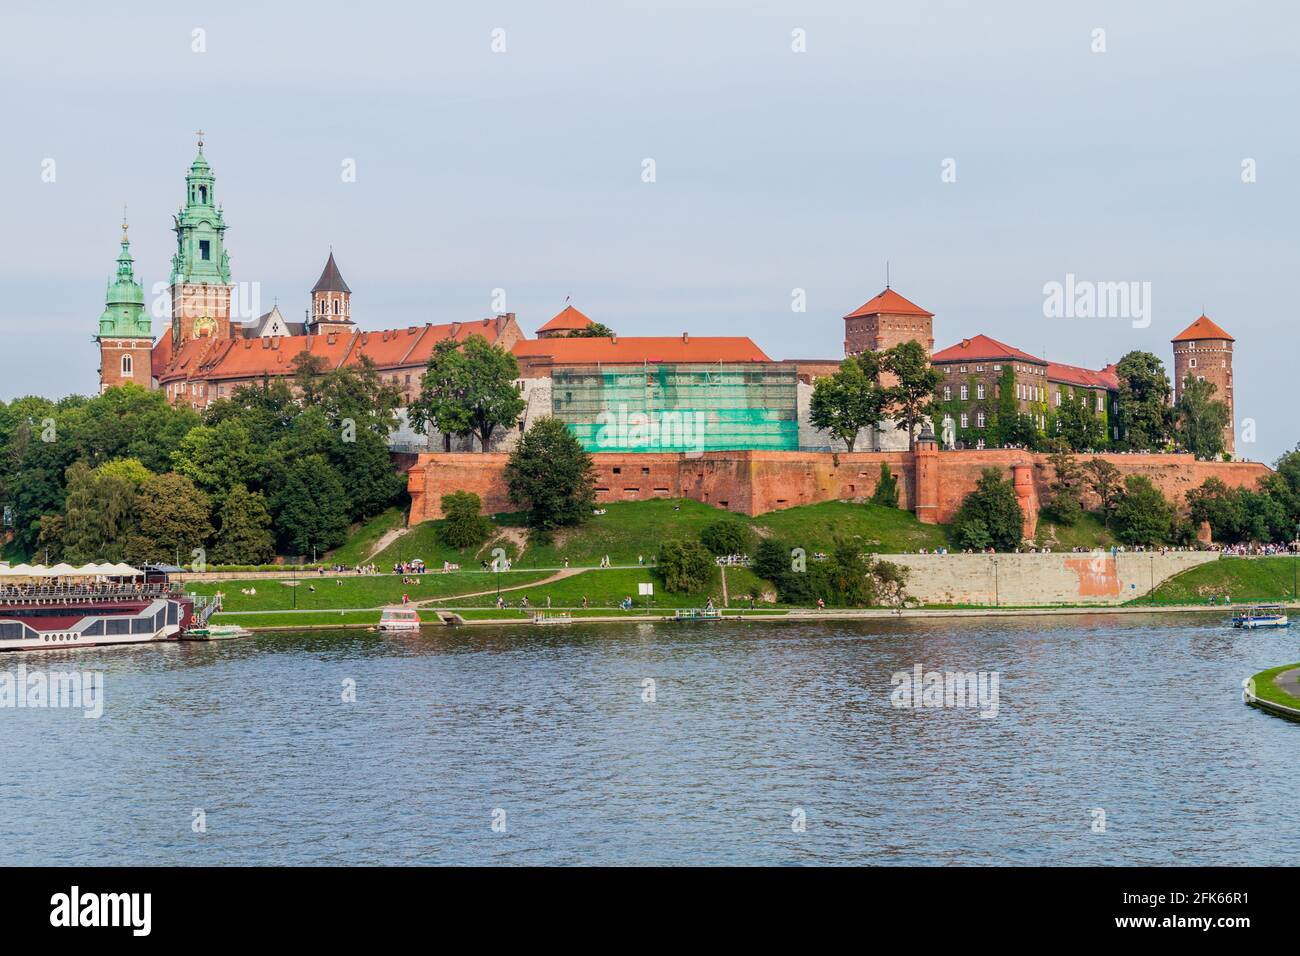 Vistula river, in front of Wawel castle in Krakow, Poland Stock Photo